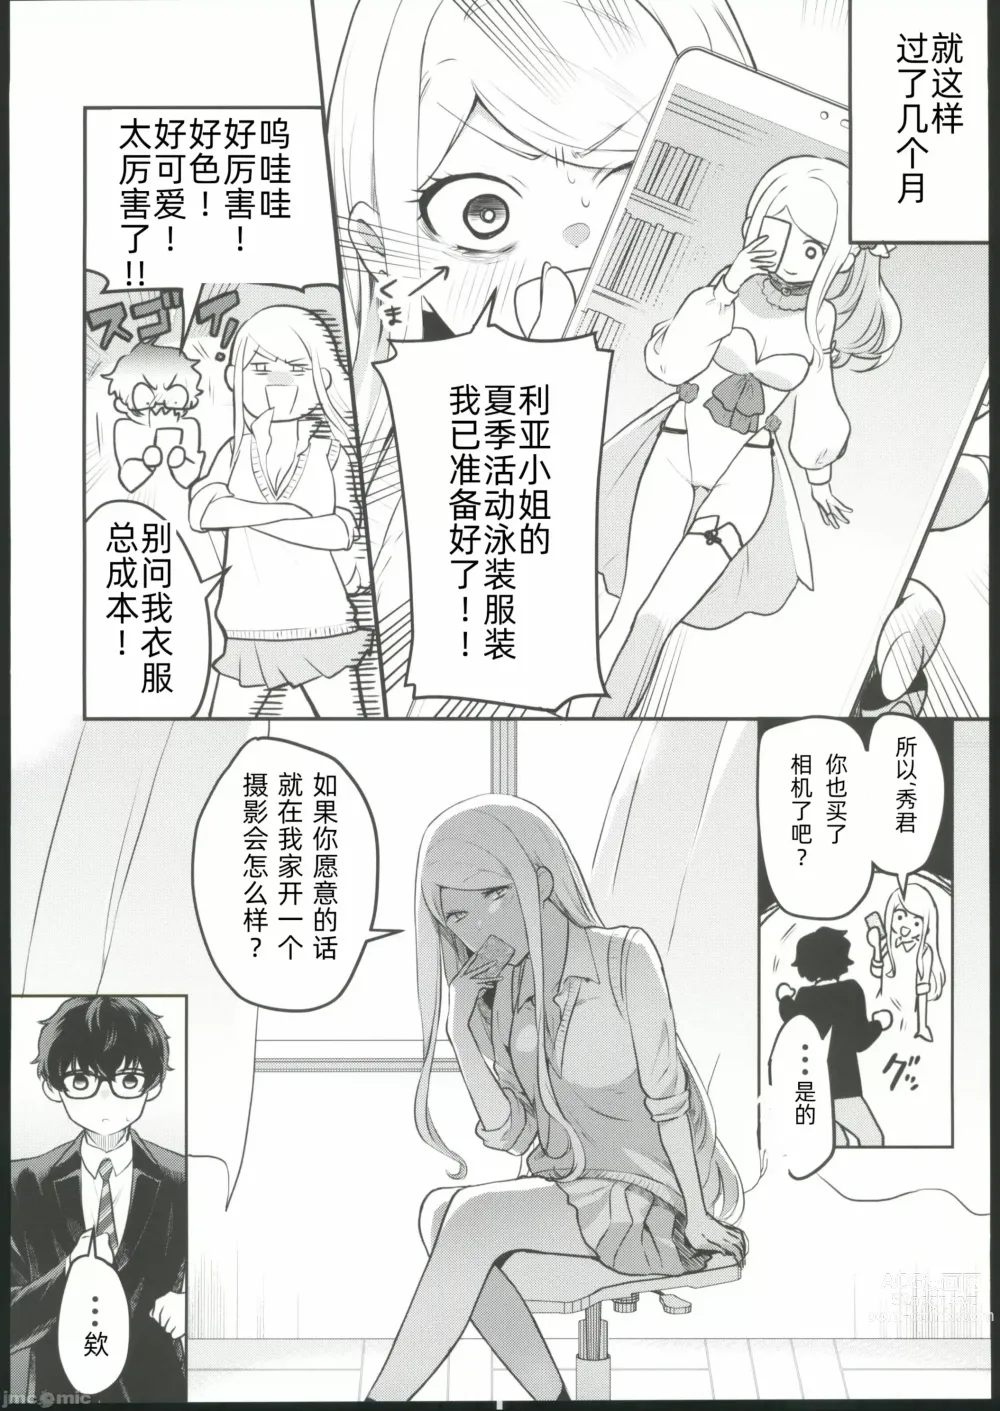 Page 7 of doujinshi cosplay女孩与亲密接触摄影会